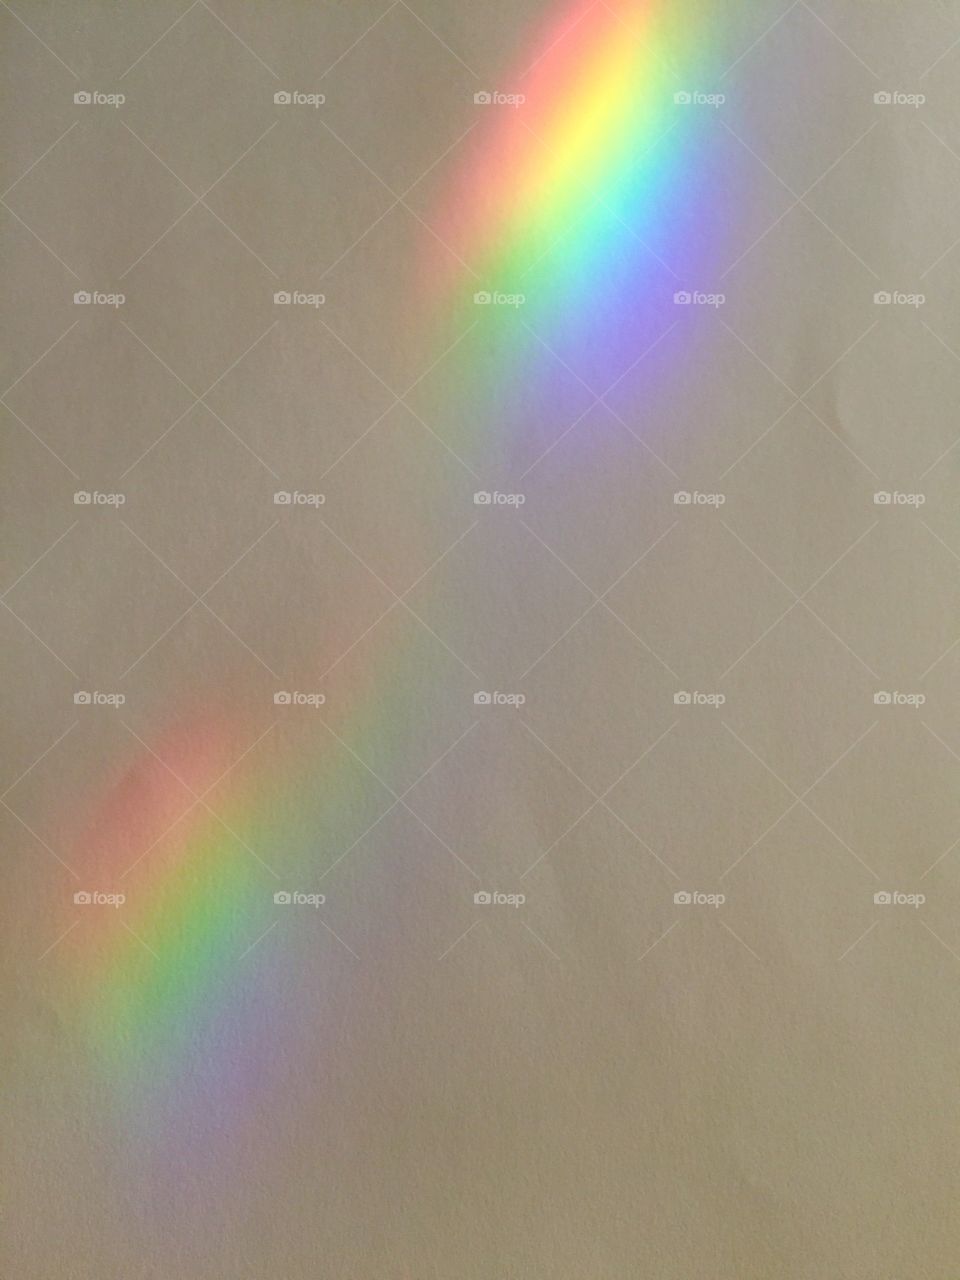 A colorful rainbow against a tan wall.